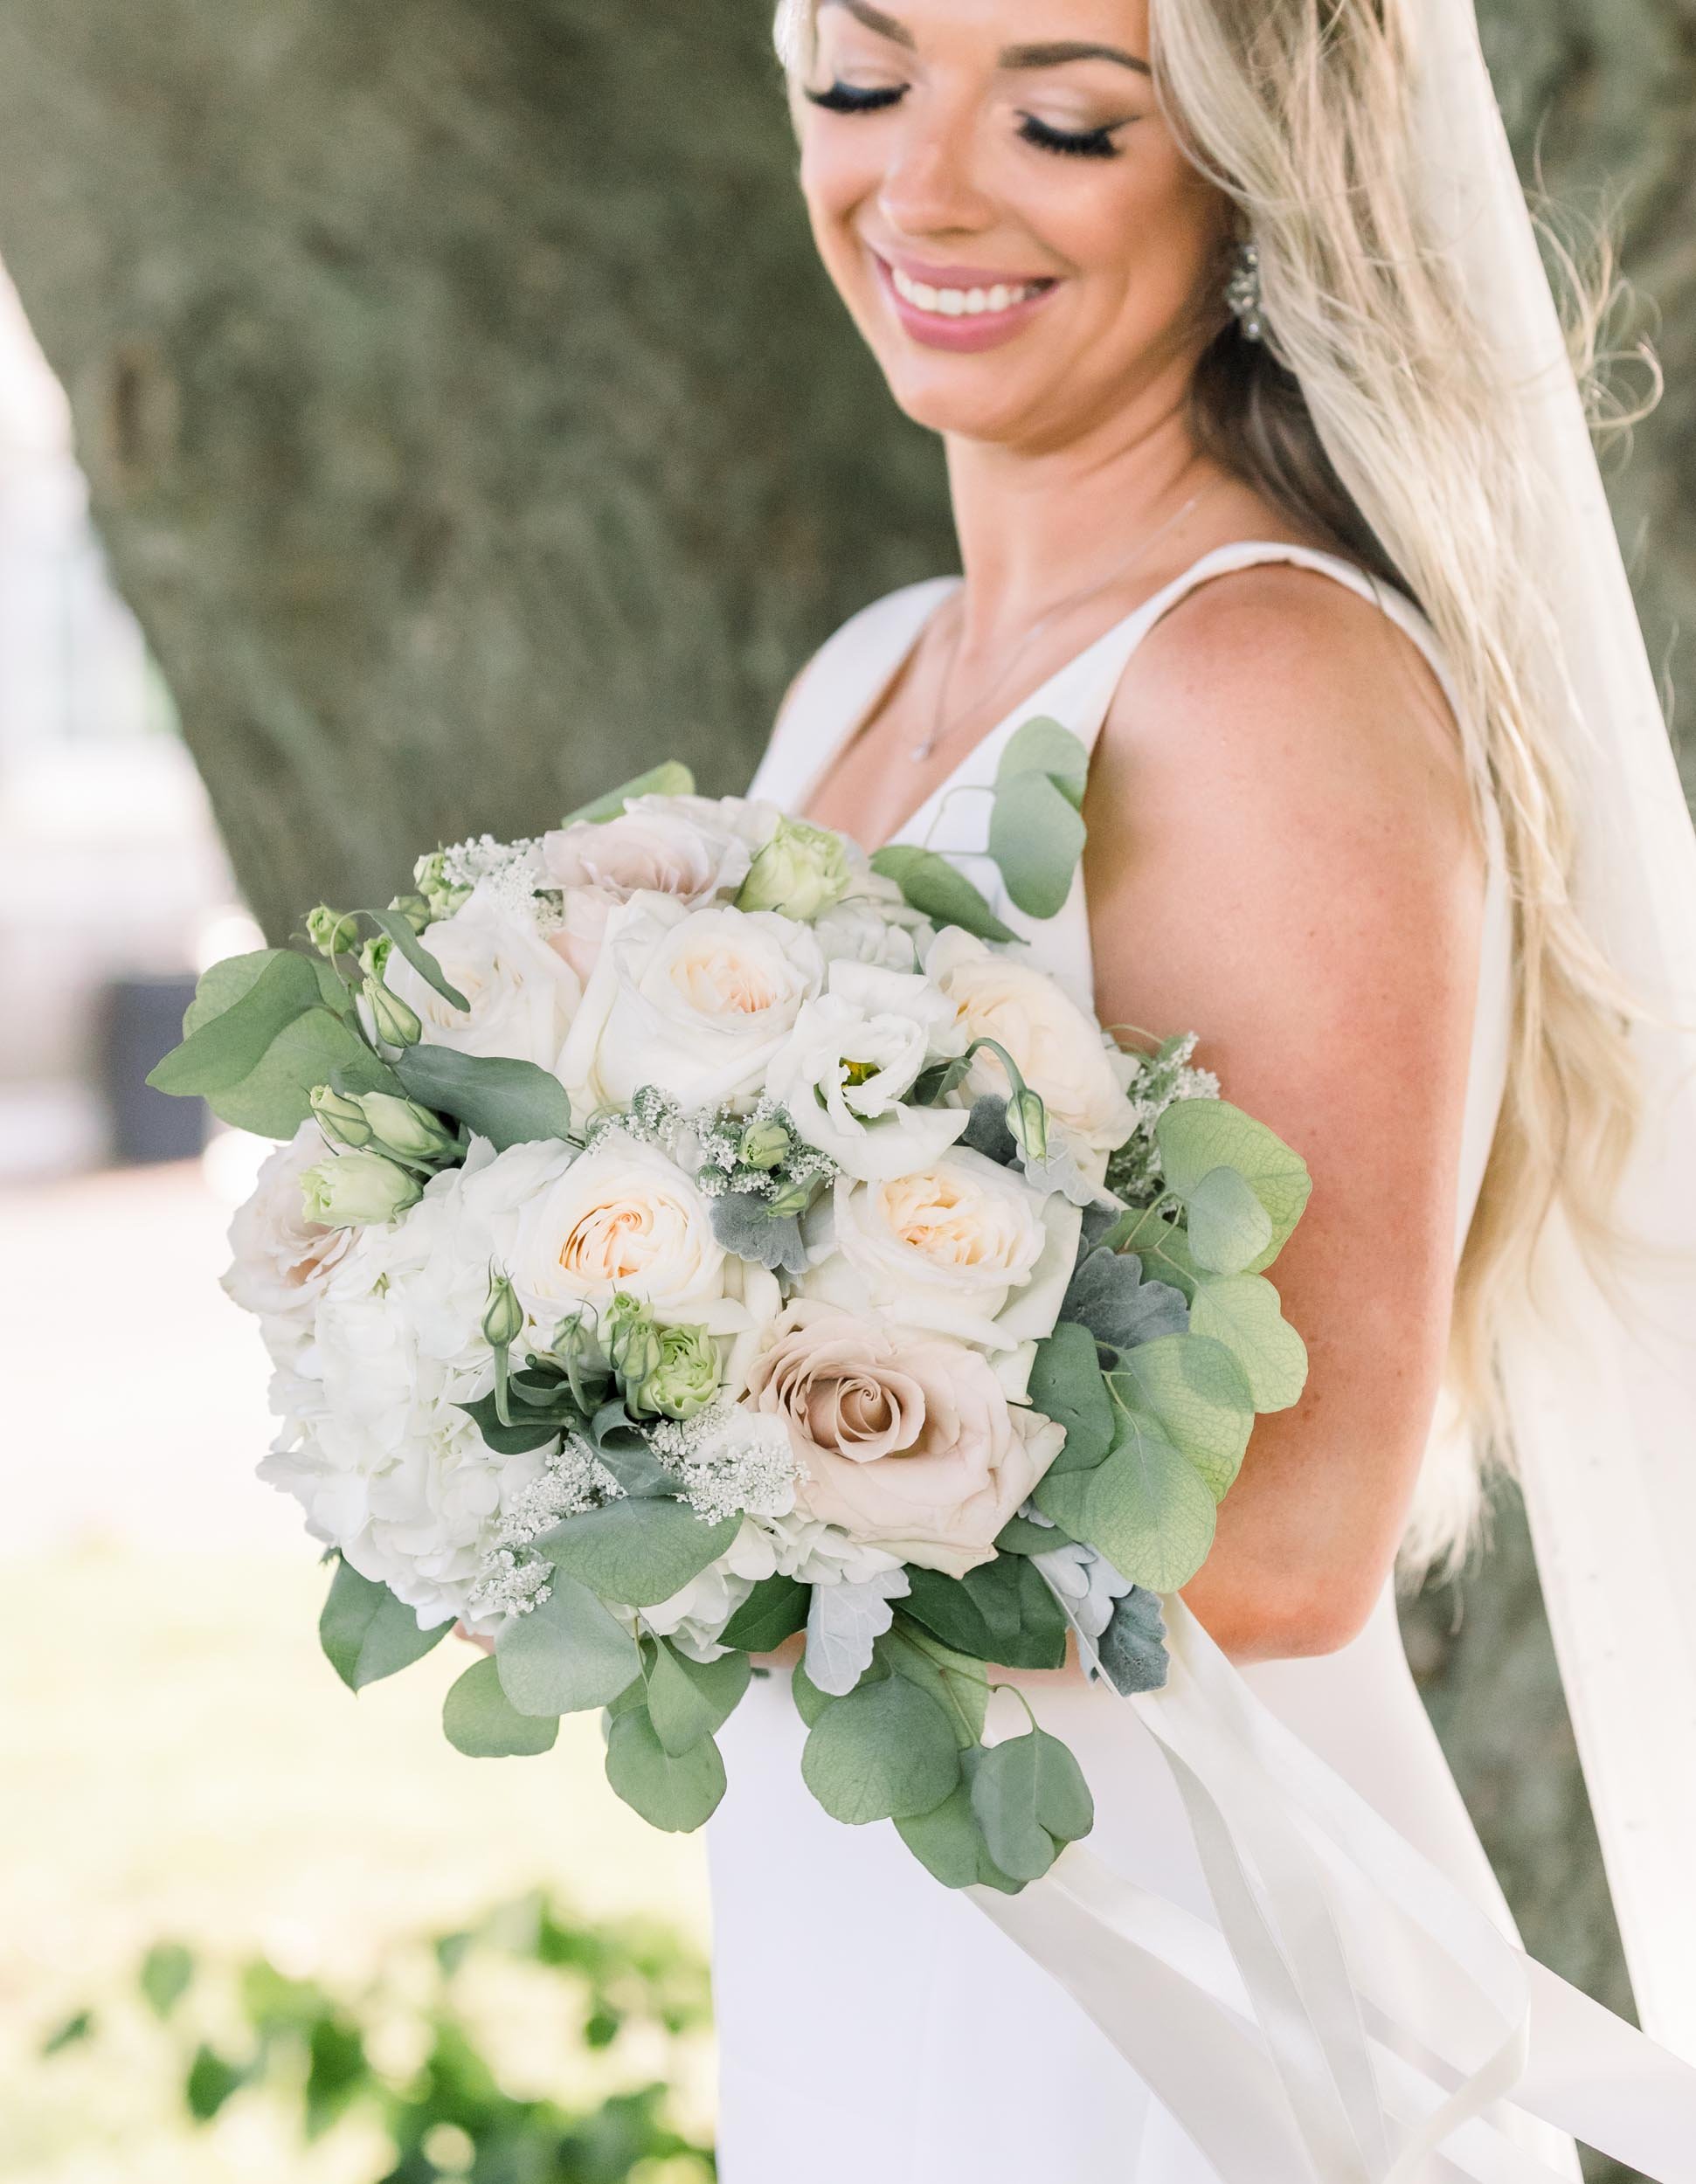 hengstenbergs-florist-weddings-love-story-marley-alex-©OliviaCainePhotography-002.jpg